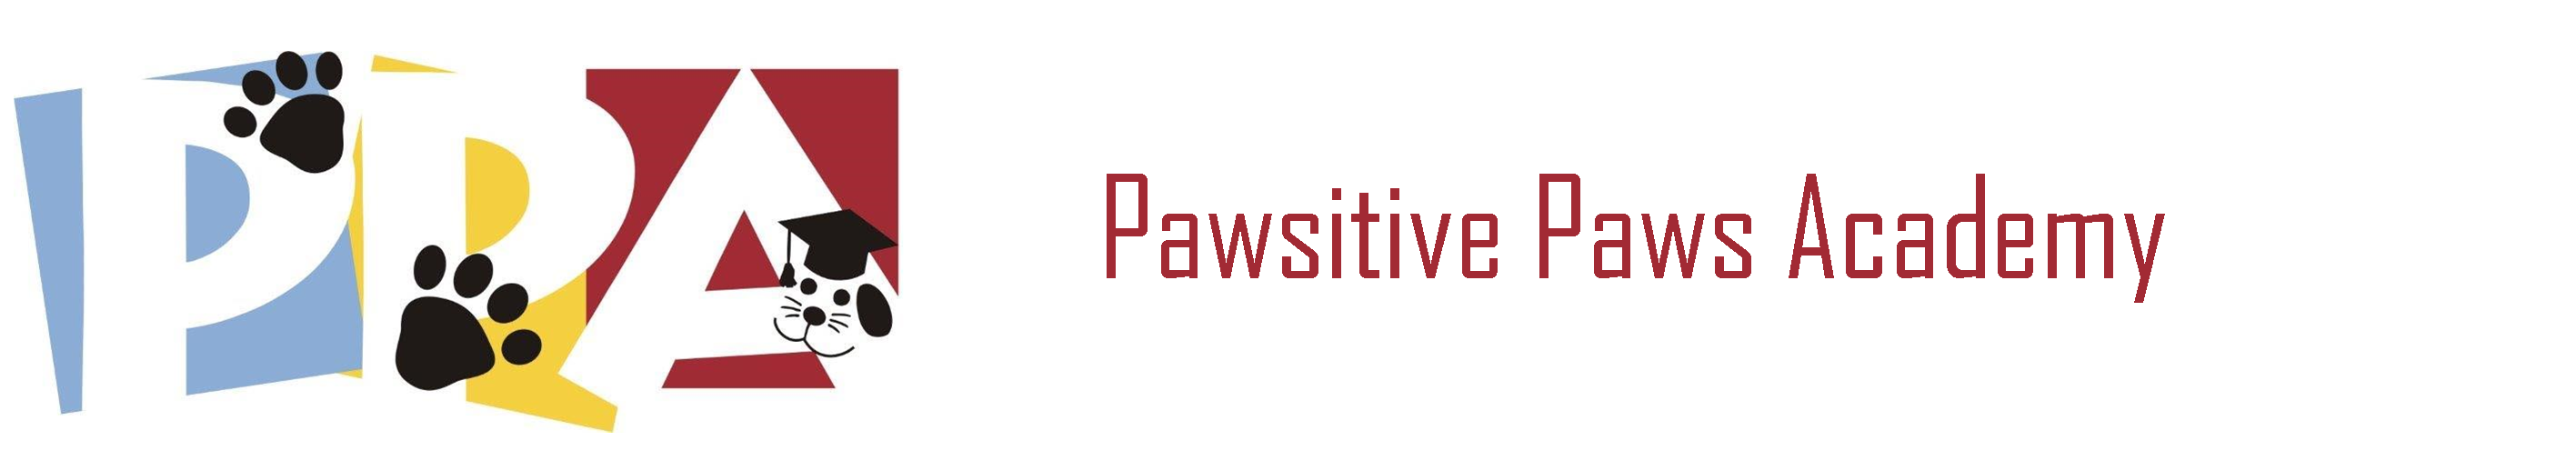 Pawsitive Paws Academy